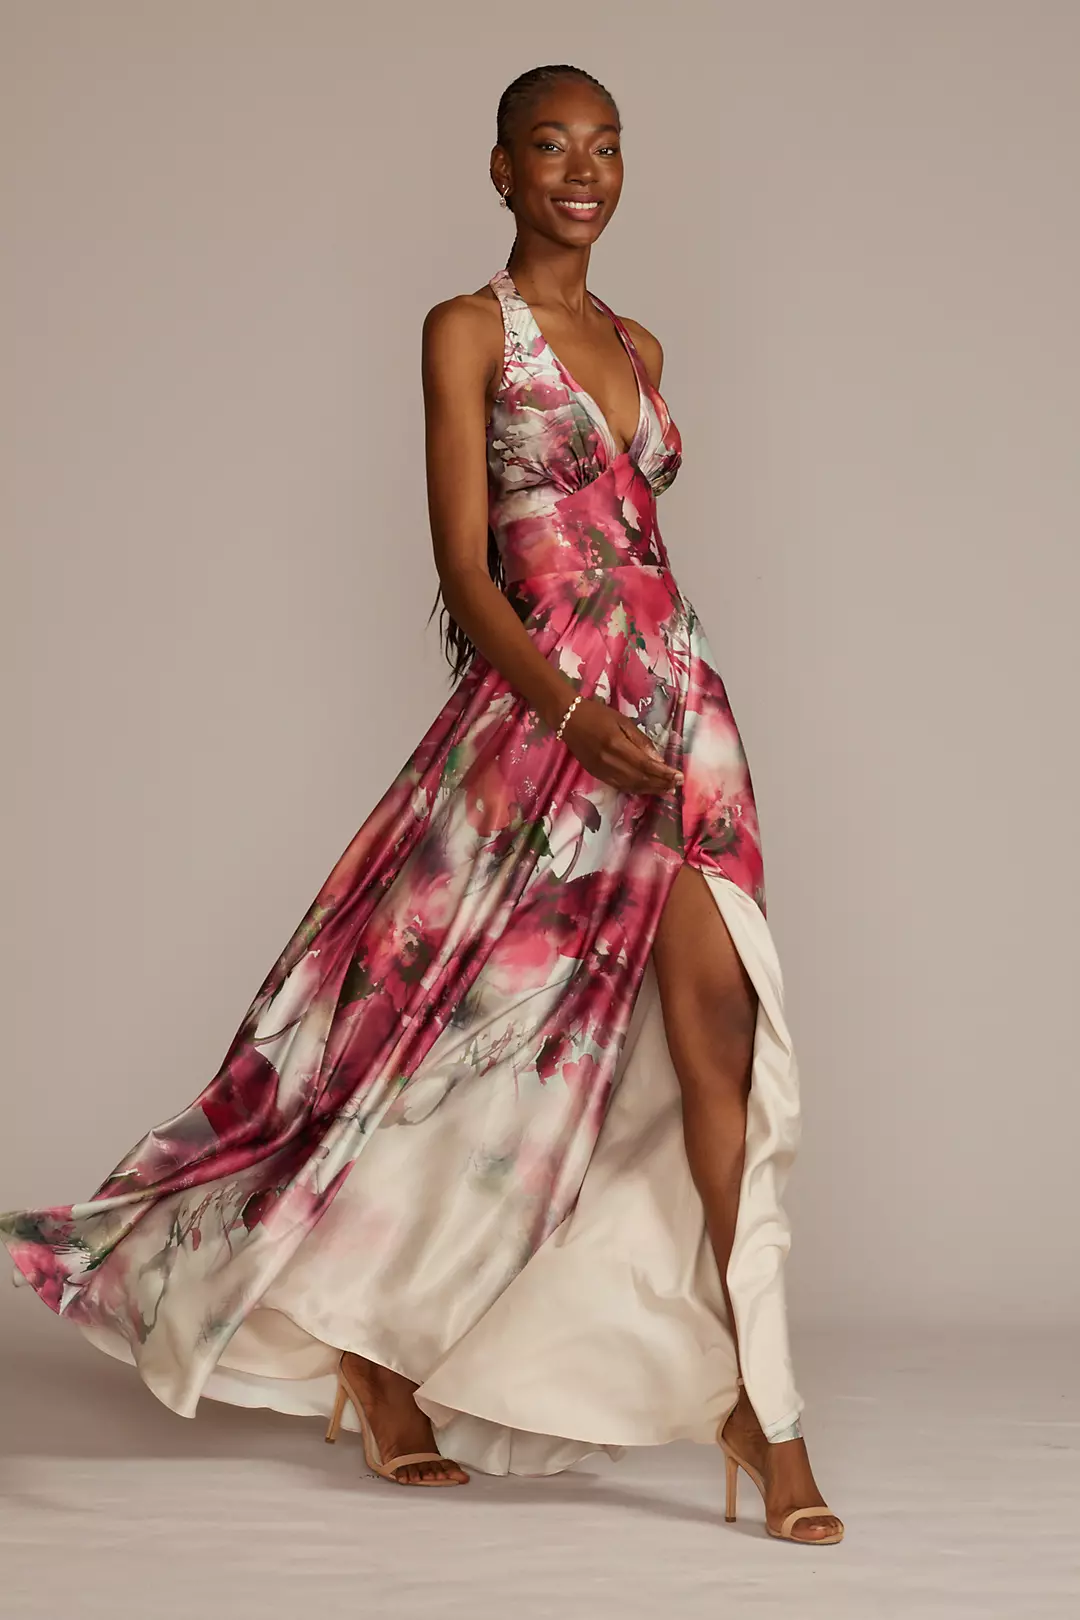 Floral Dresses for Women- Floral Print Dresses